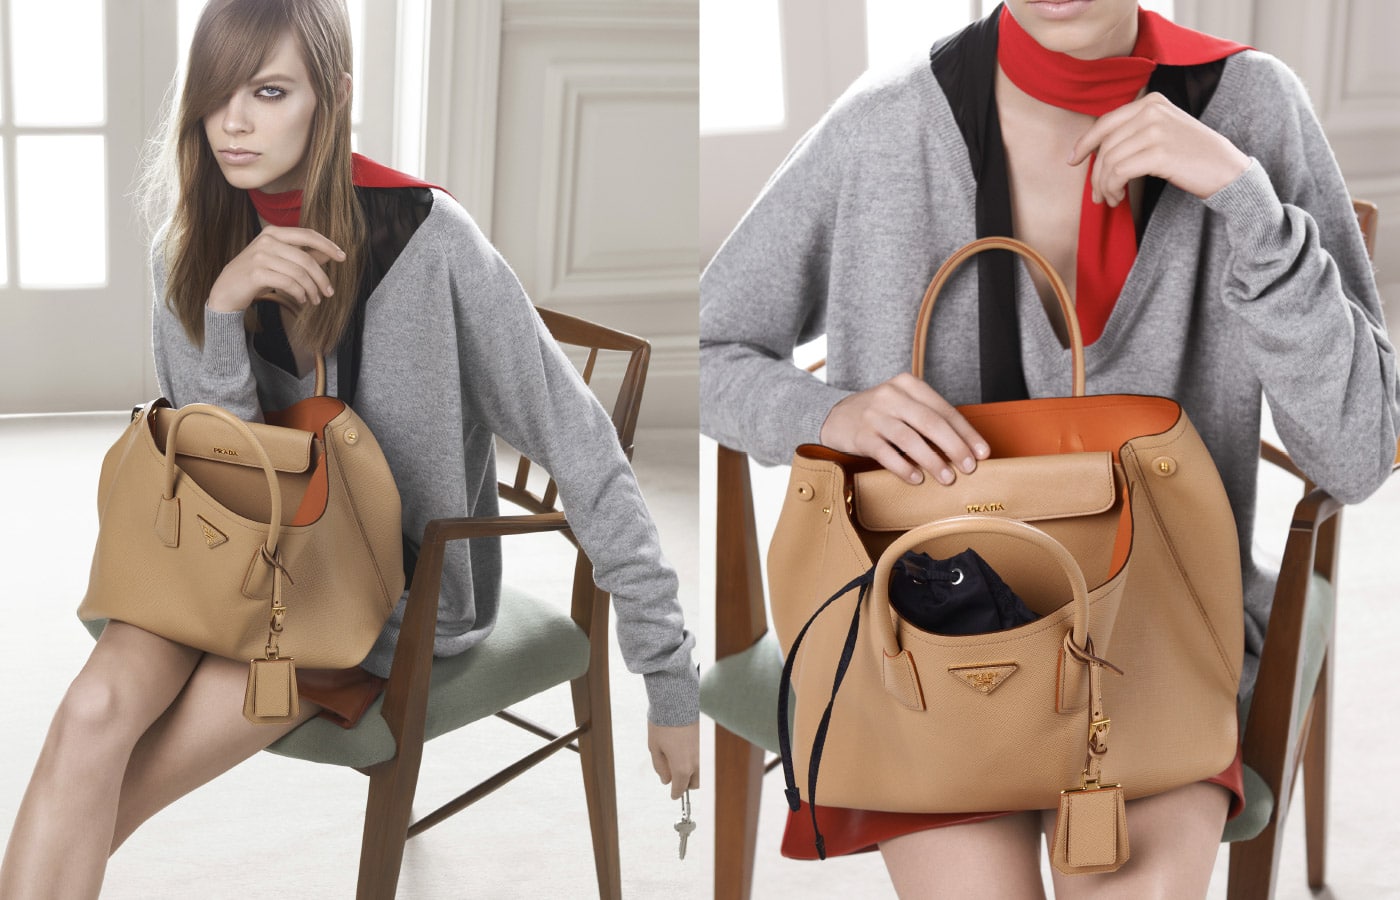 Prada Prefall 2014 Ad Campaign featuring Double Bag